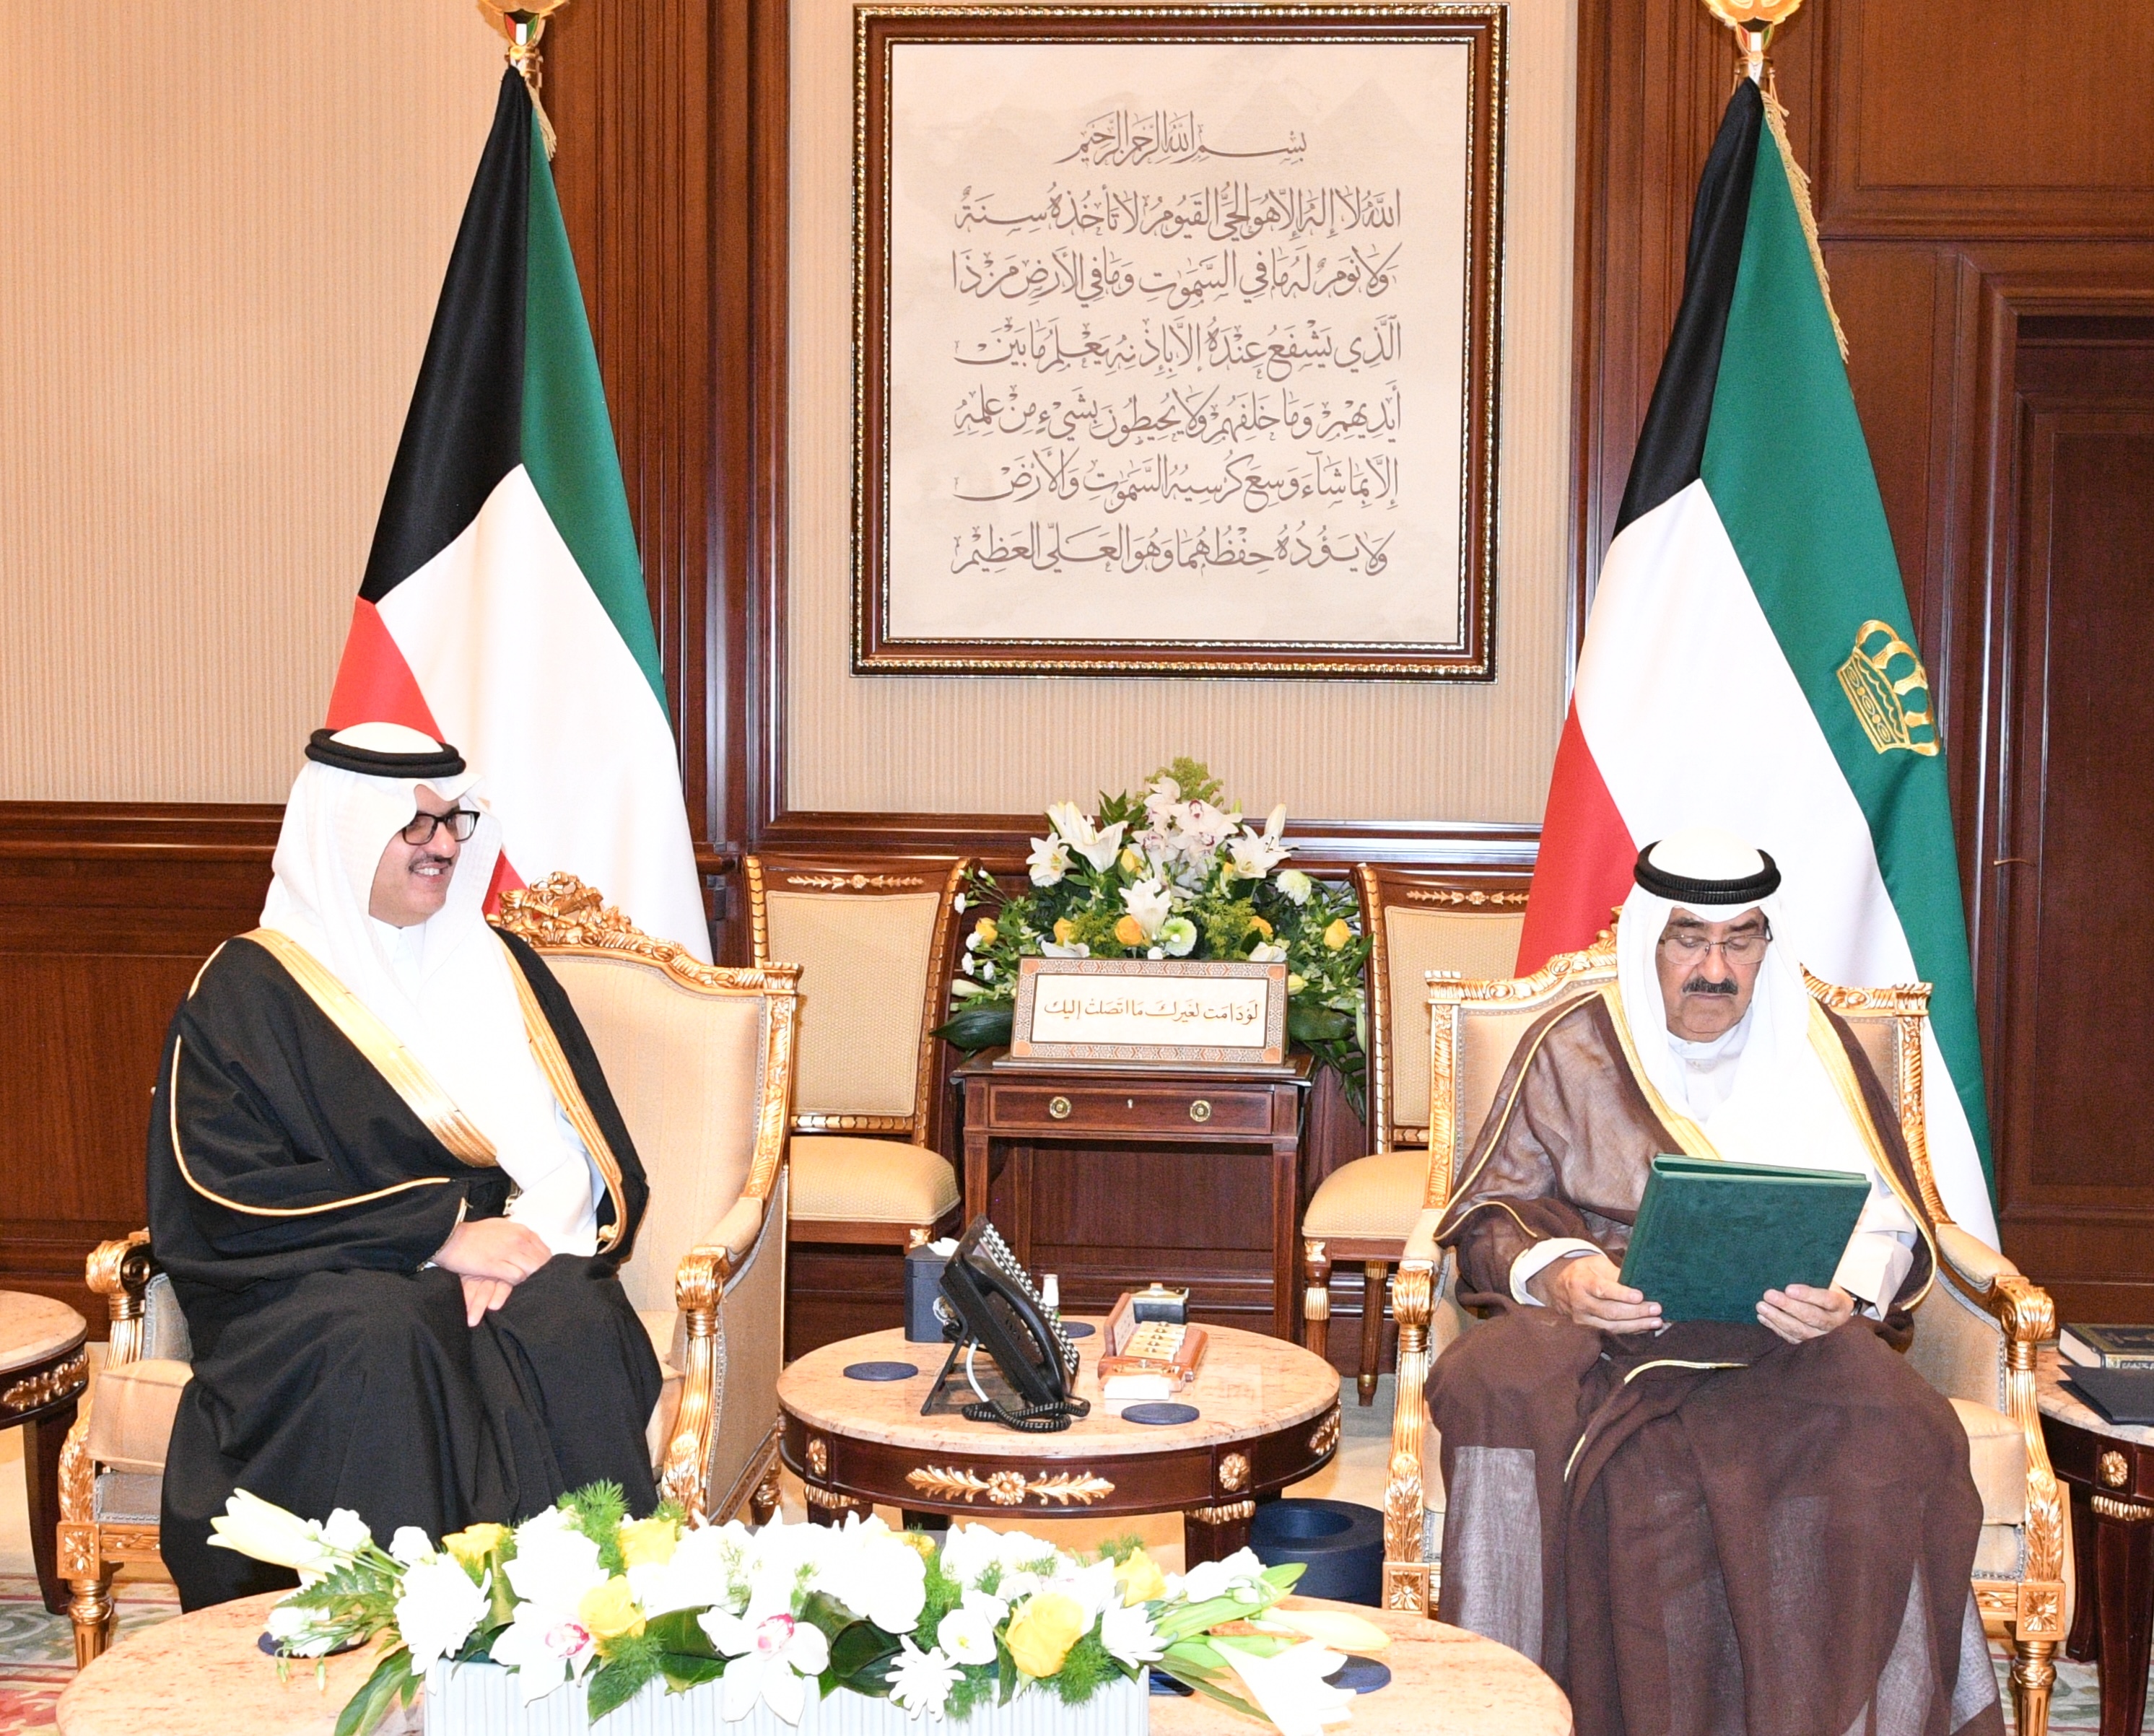 Amir Sheikh Mishal Al-Ahmad Al-Jaber Al-Sabah received Saudi Arabia's Ambassador to Kuwait, Prince Sultan bin Saad Al-Saud